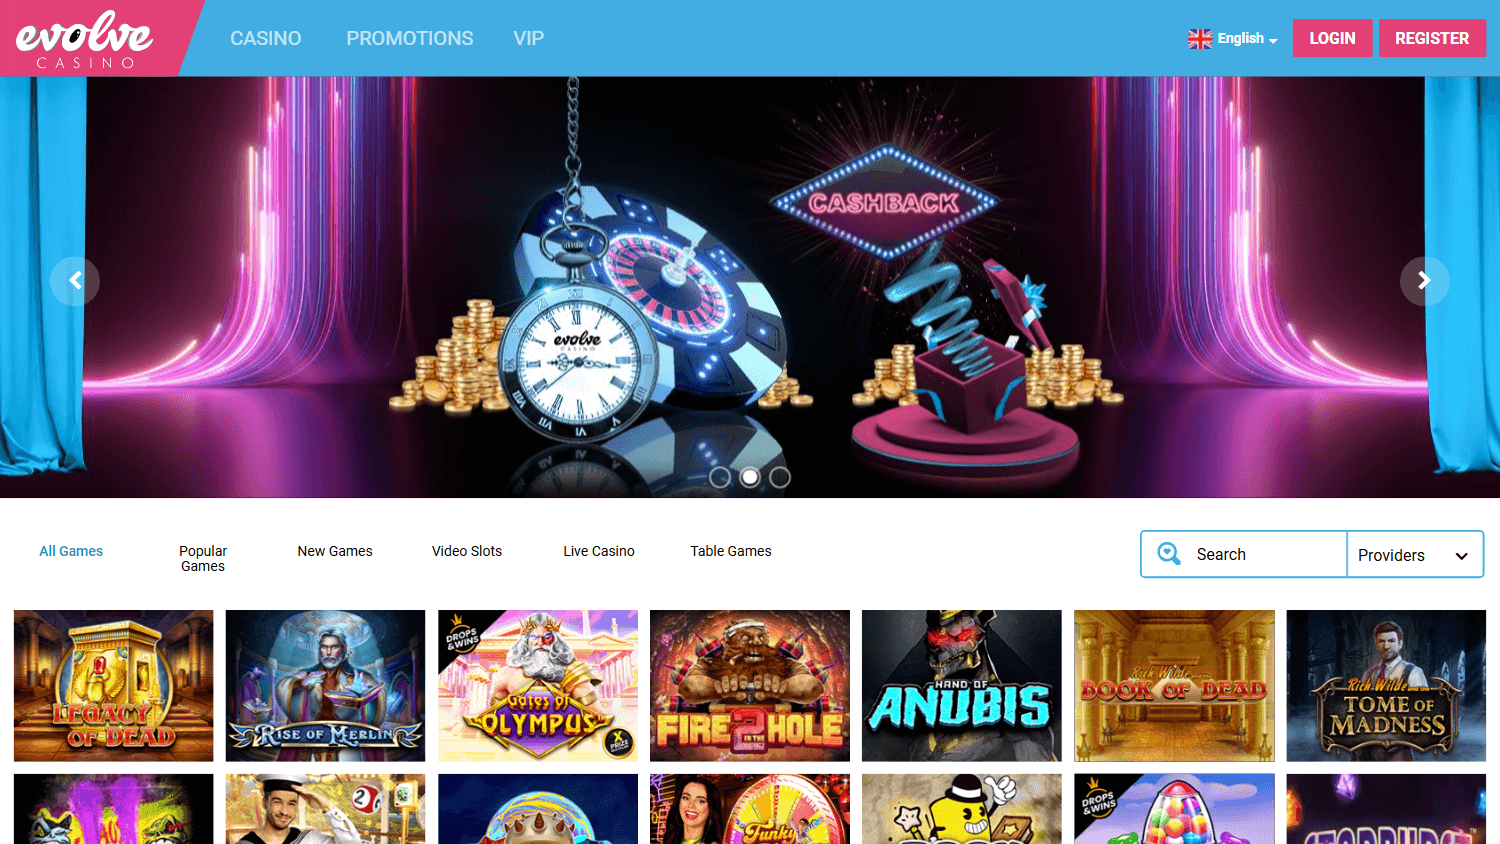 evolve_casino_homepage_desktop